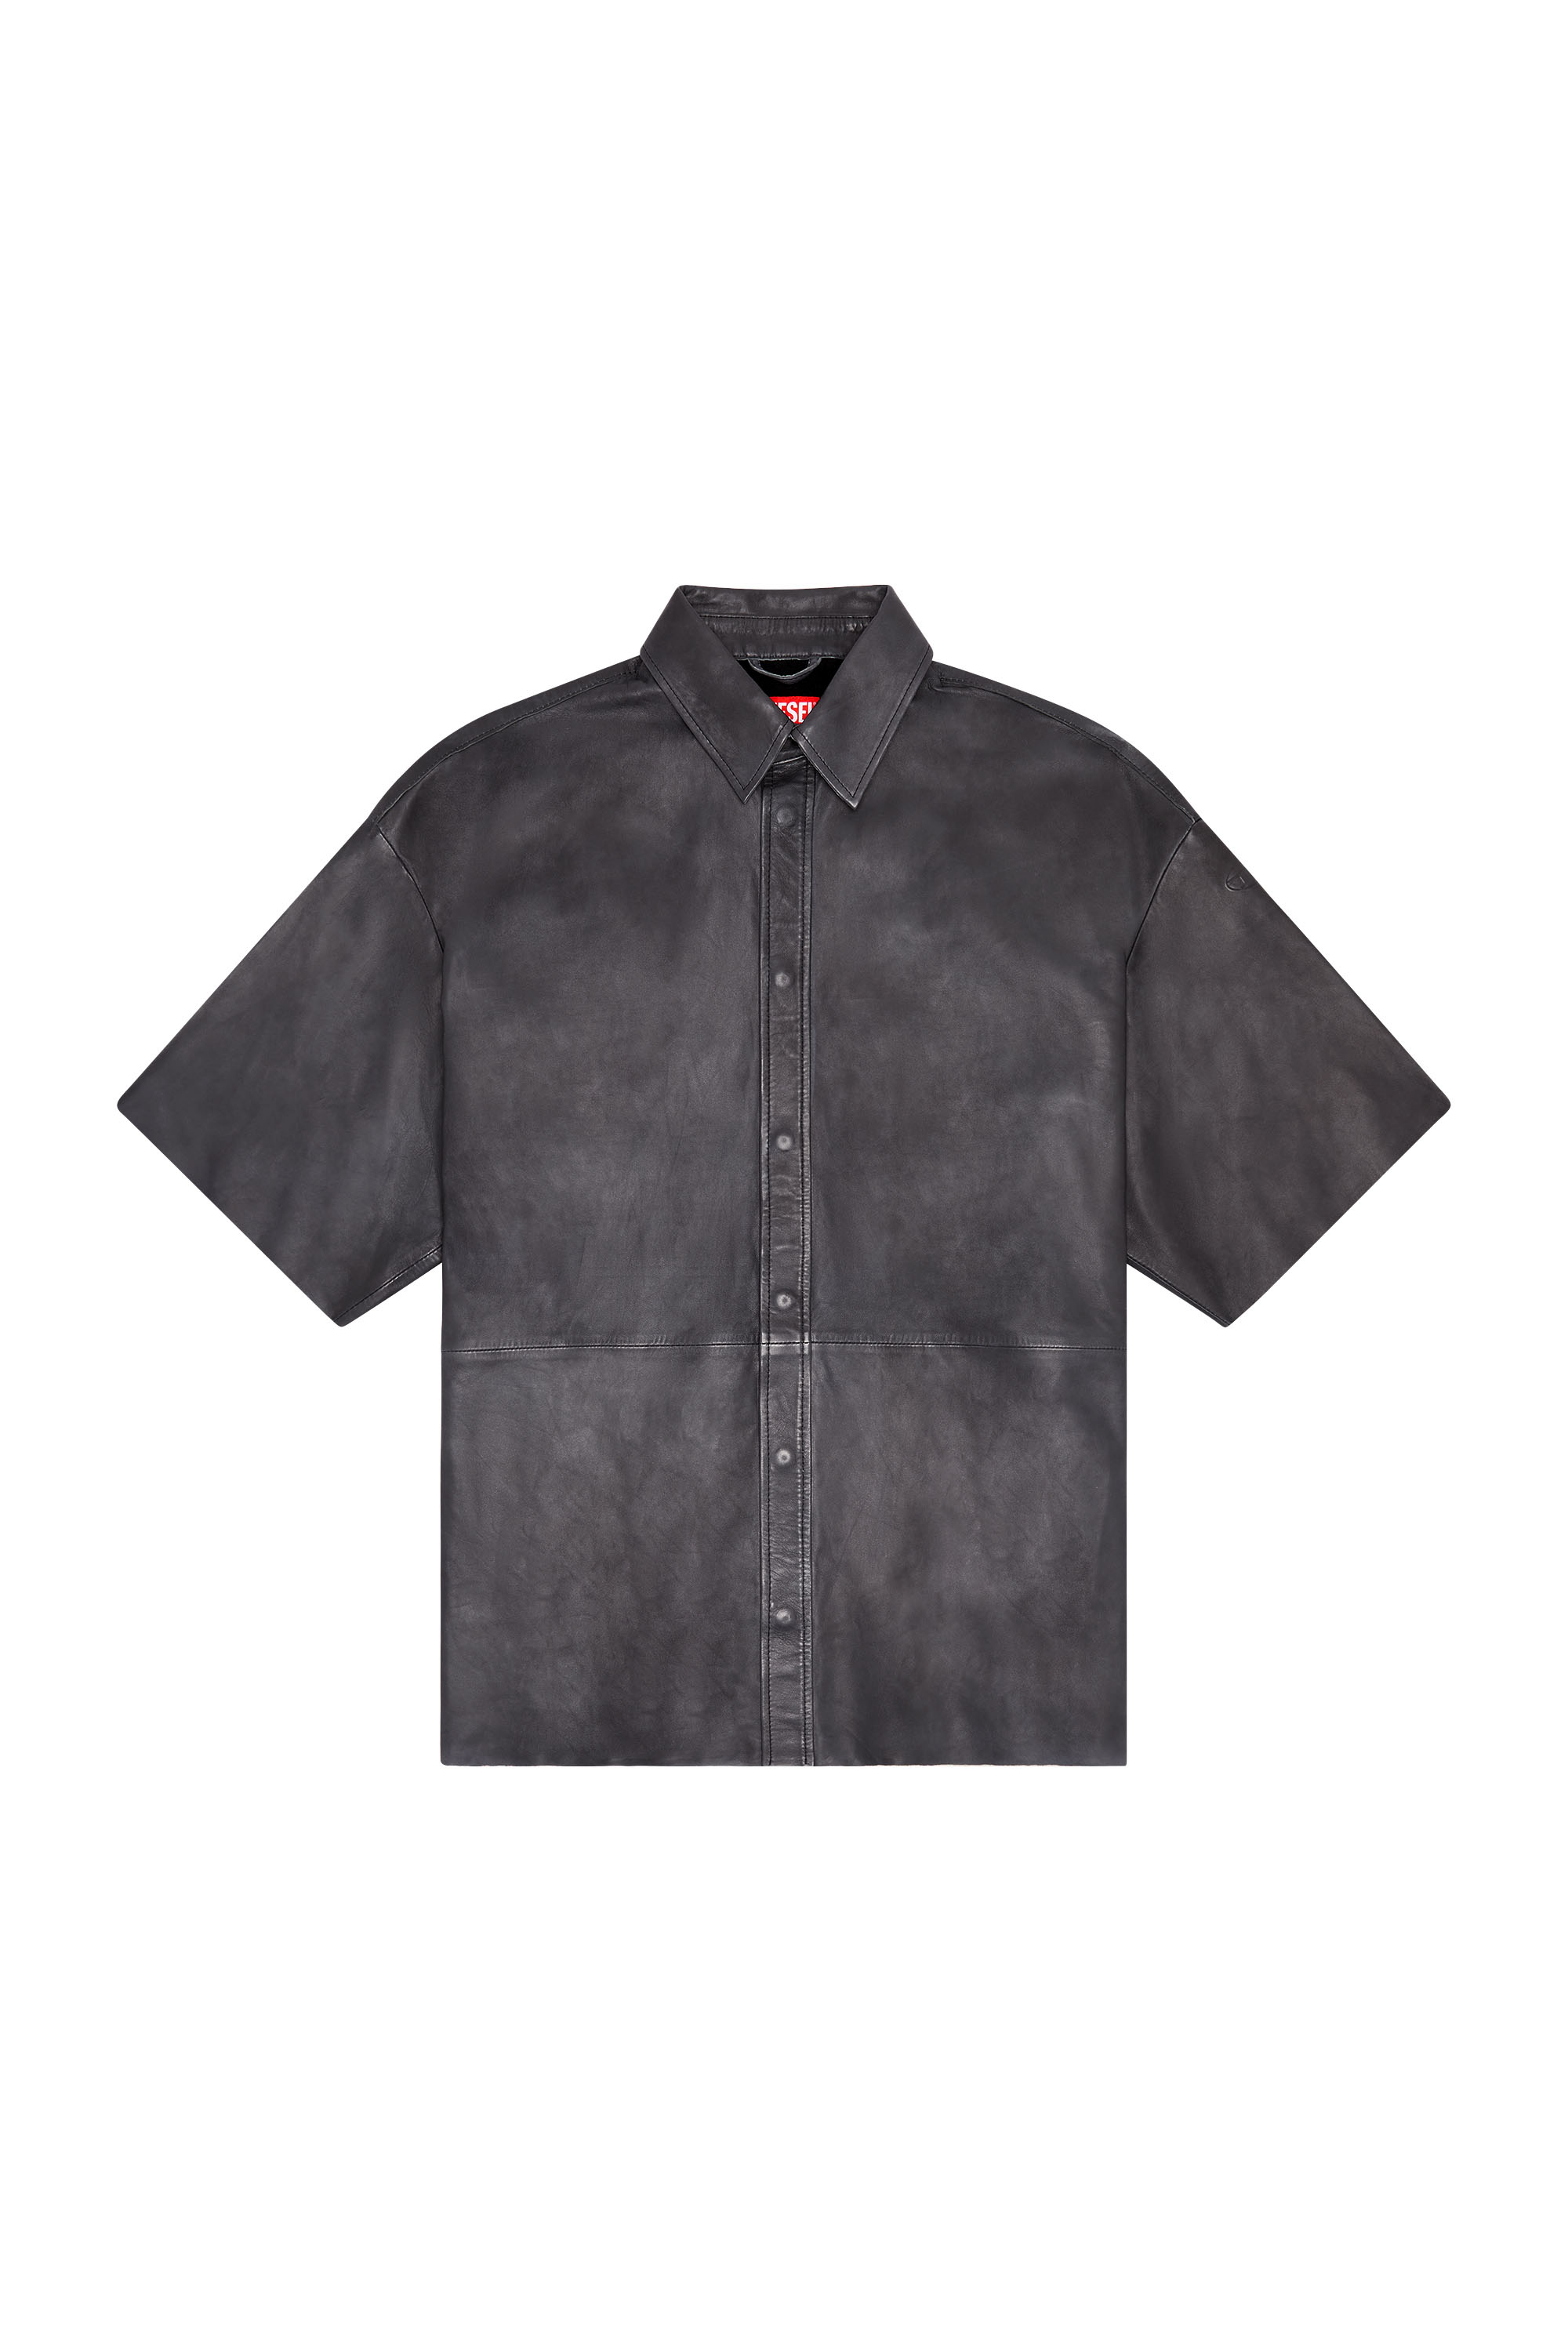 Diesel - S-EMIN-LTH, Herren Oversize-Shirt aus behandeltem Leder in Schwarz - Image 3